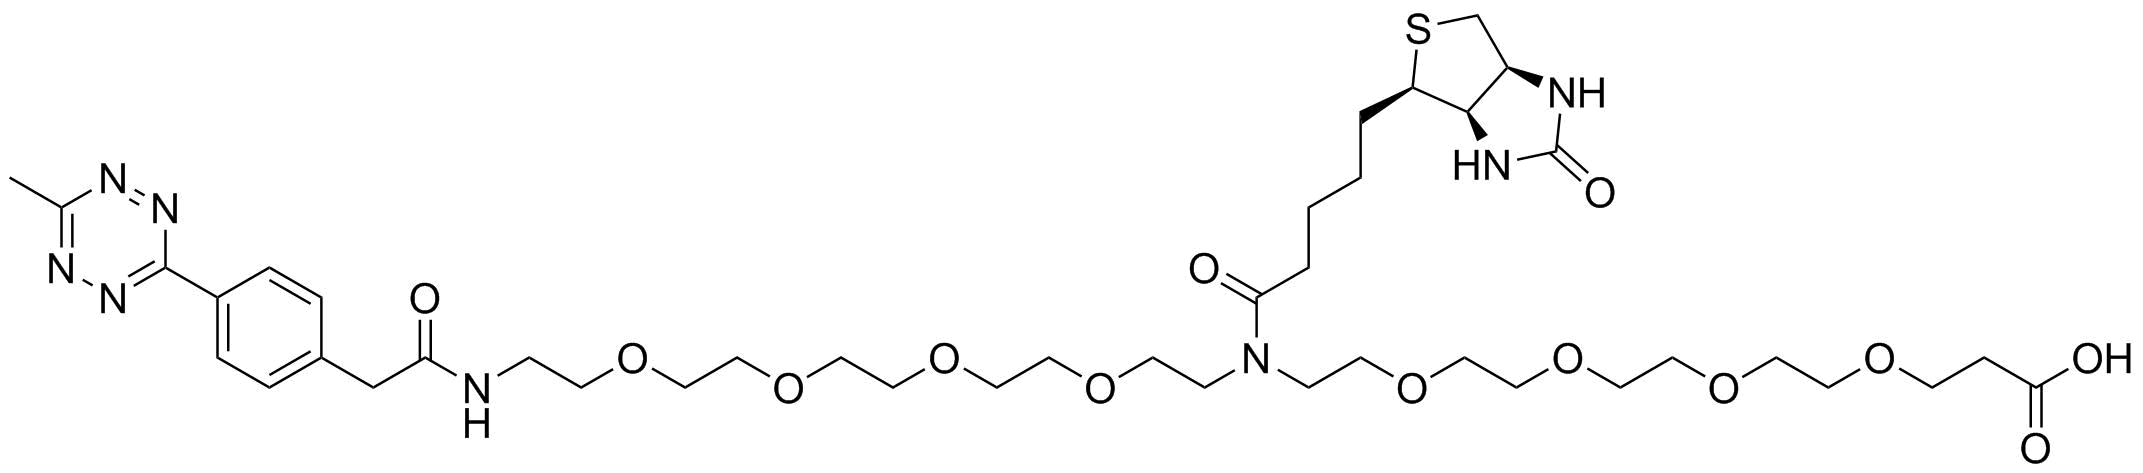 N-(Methyltetrazine-PEG4)-N-Biotin-PEG4-acid